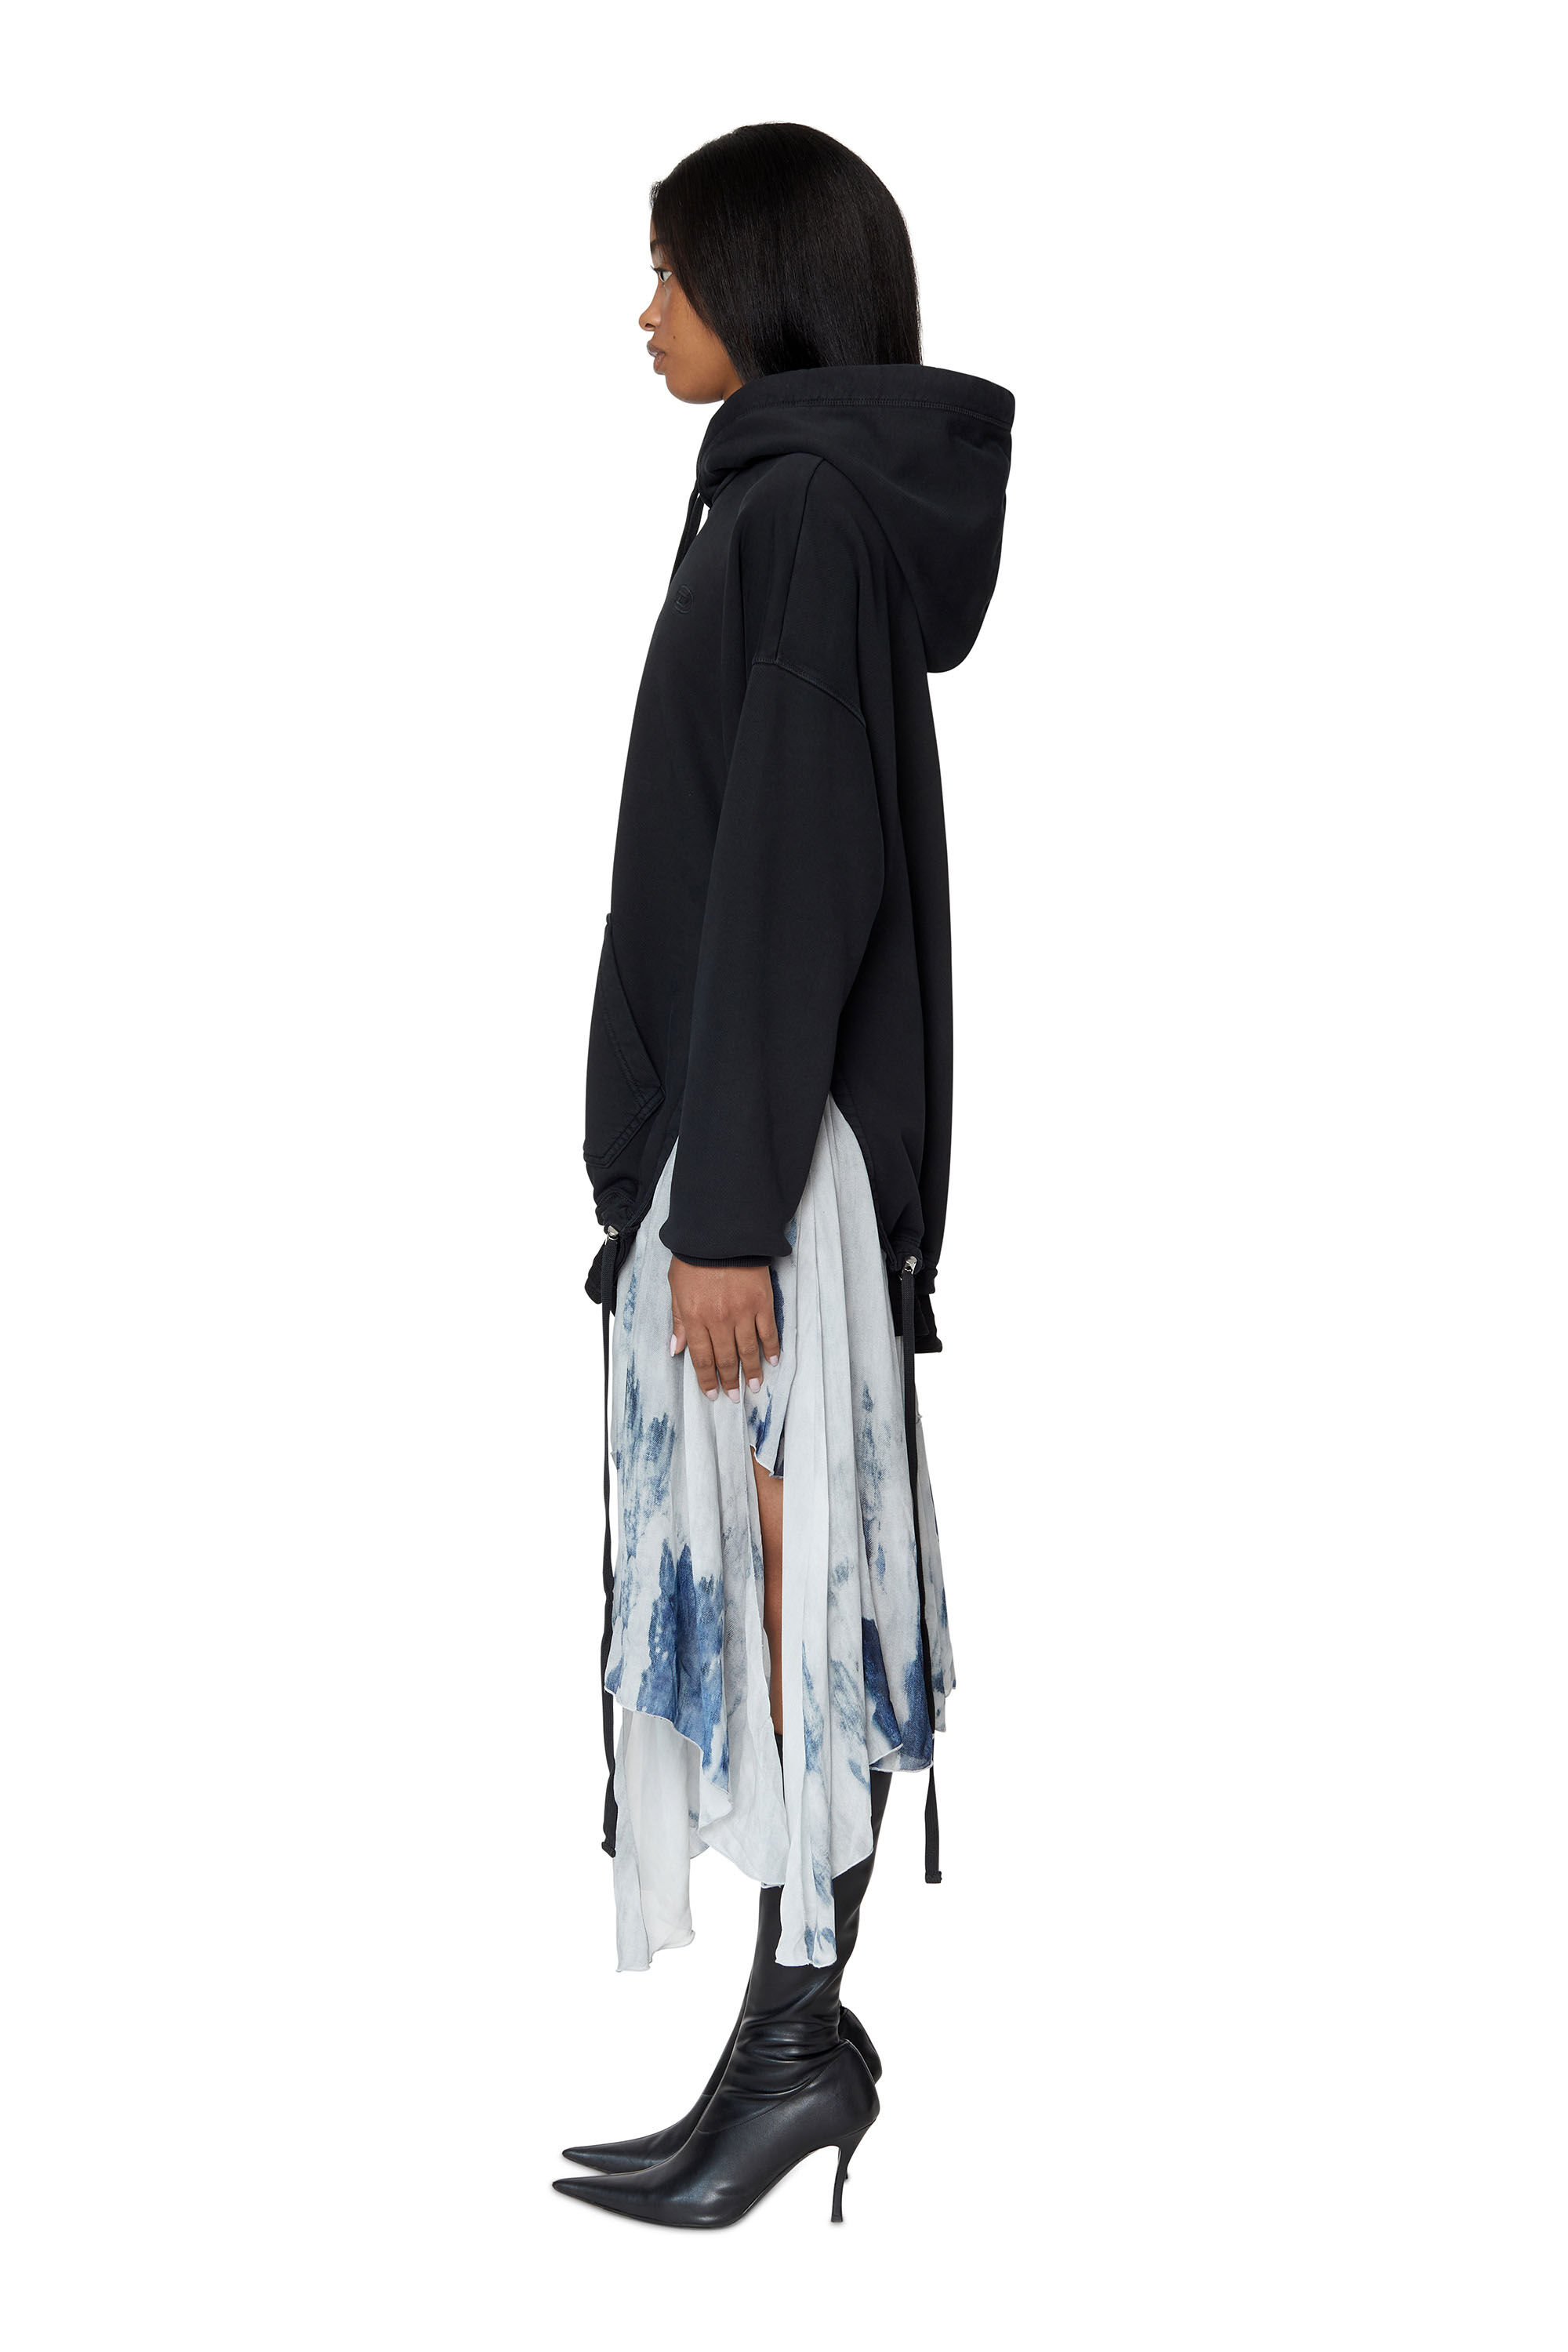 D-ROLLIER Woman: Hoodie dress with printed chiffon hem | Diesel